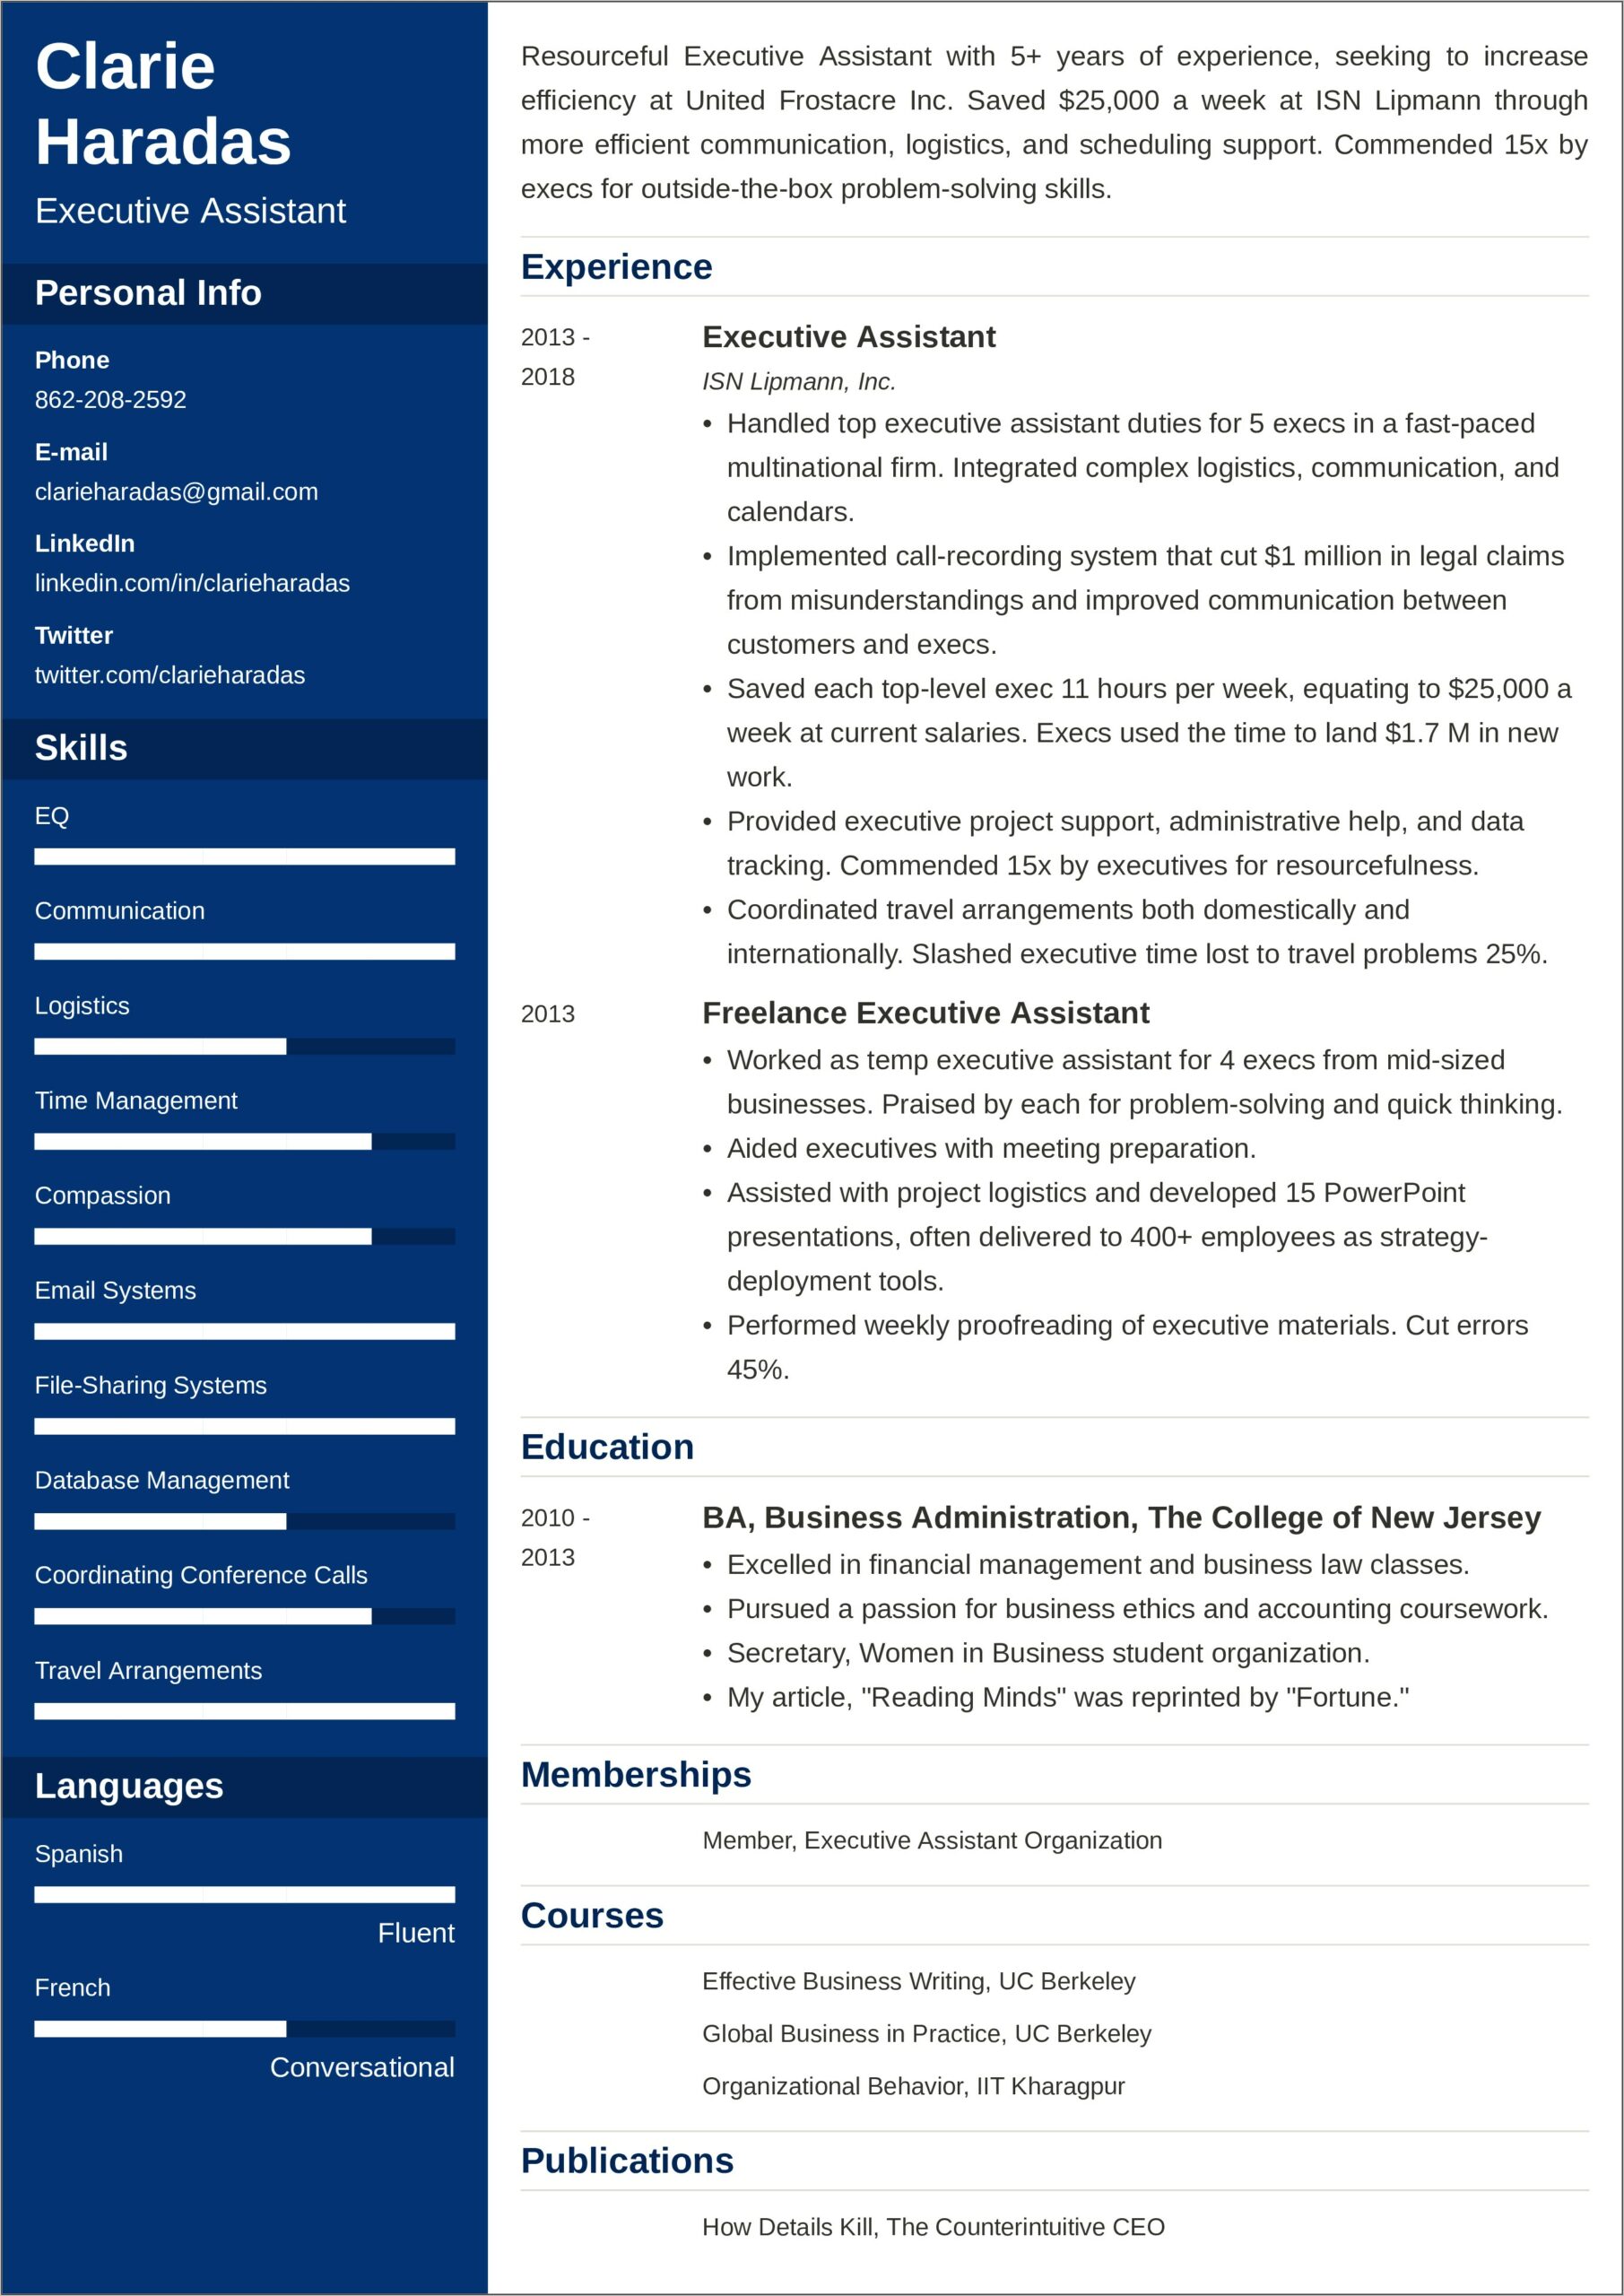 Example Finance Graduate Professional Summary Resume